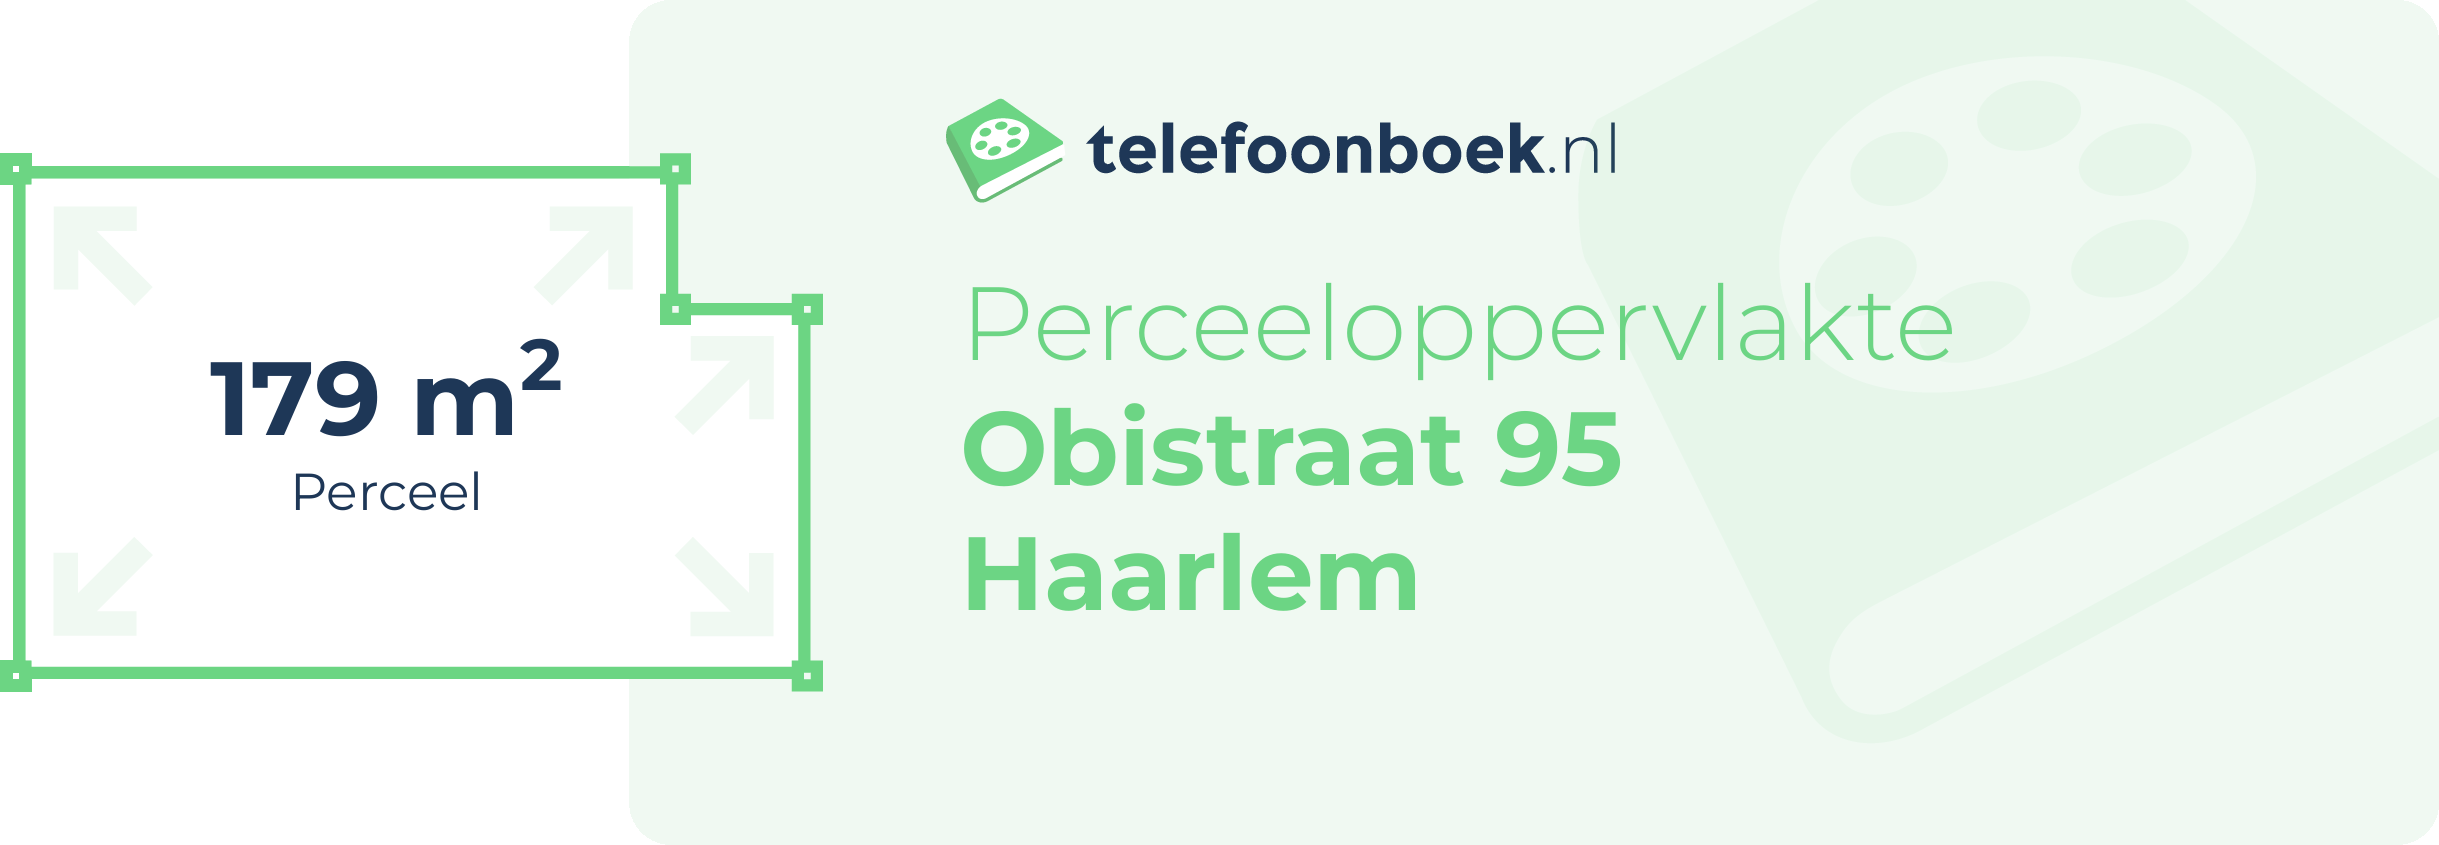 Perceeloppervlakte Obistraat 95 Haarlem